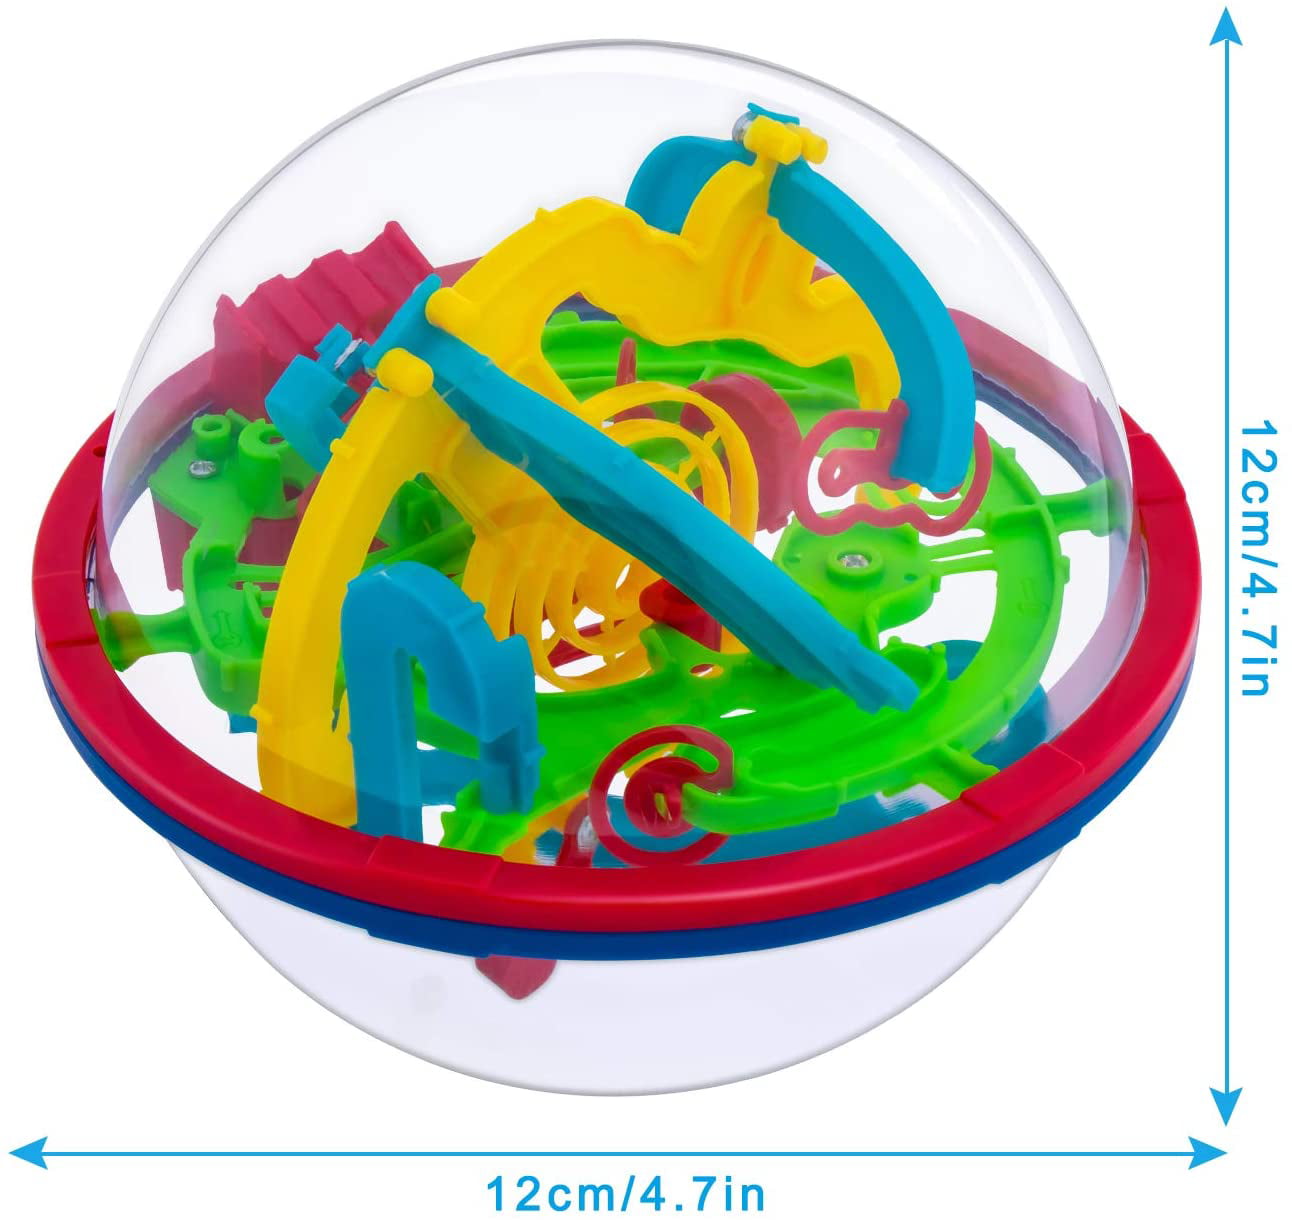 3D Maze Ball Magic Ball Puzzle Brain Teaser Ball Rolling Labyrinth Toy Blue 